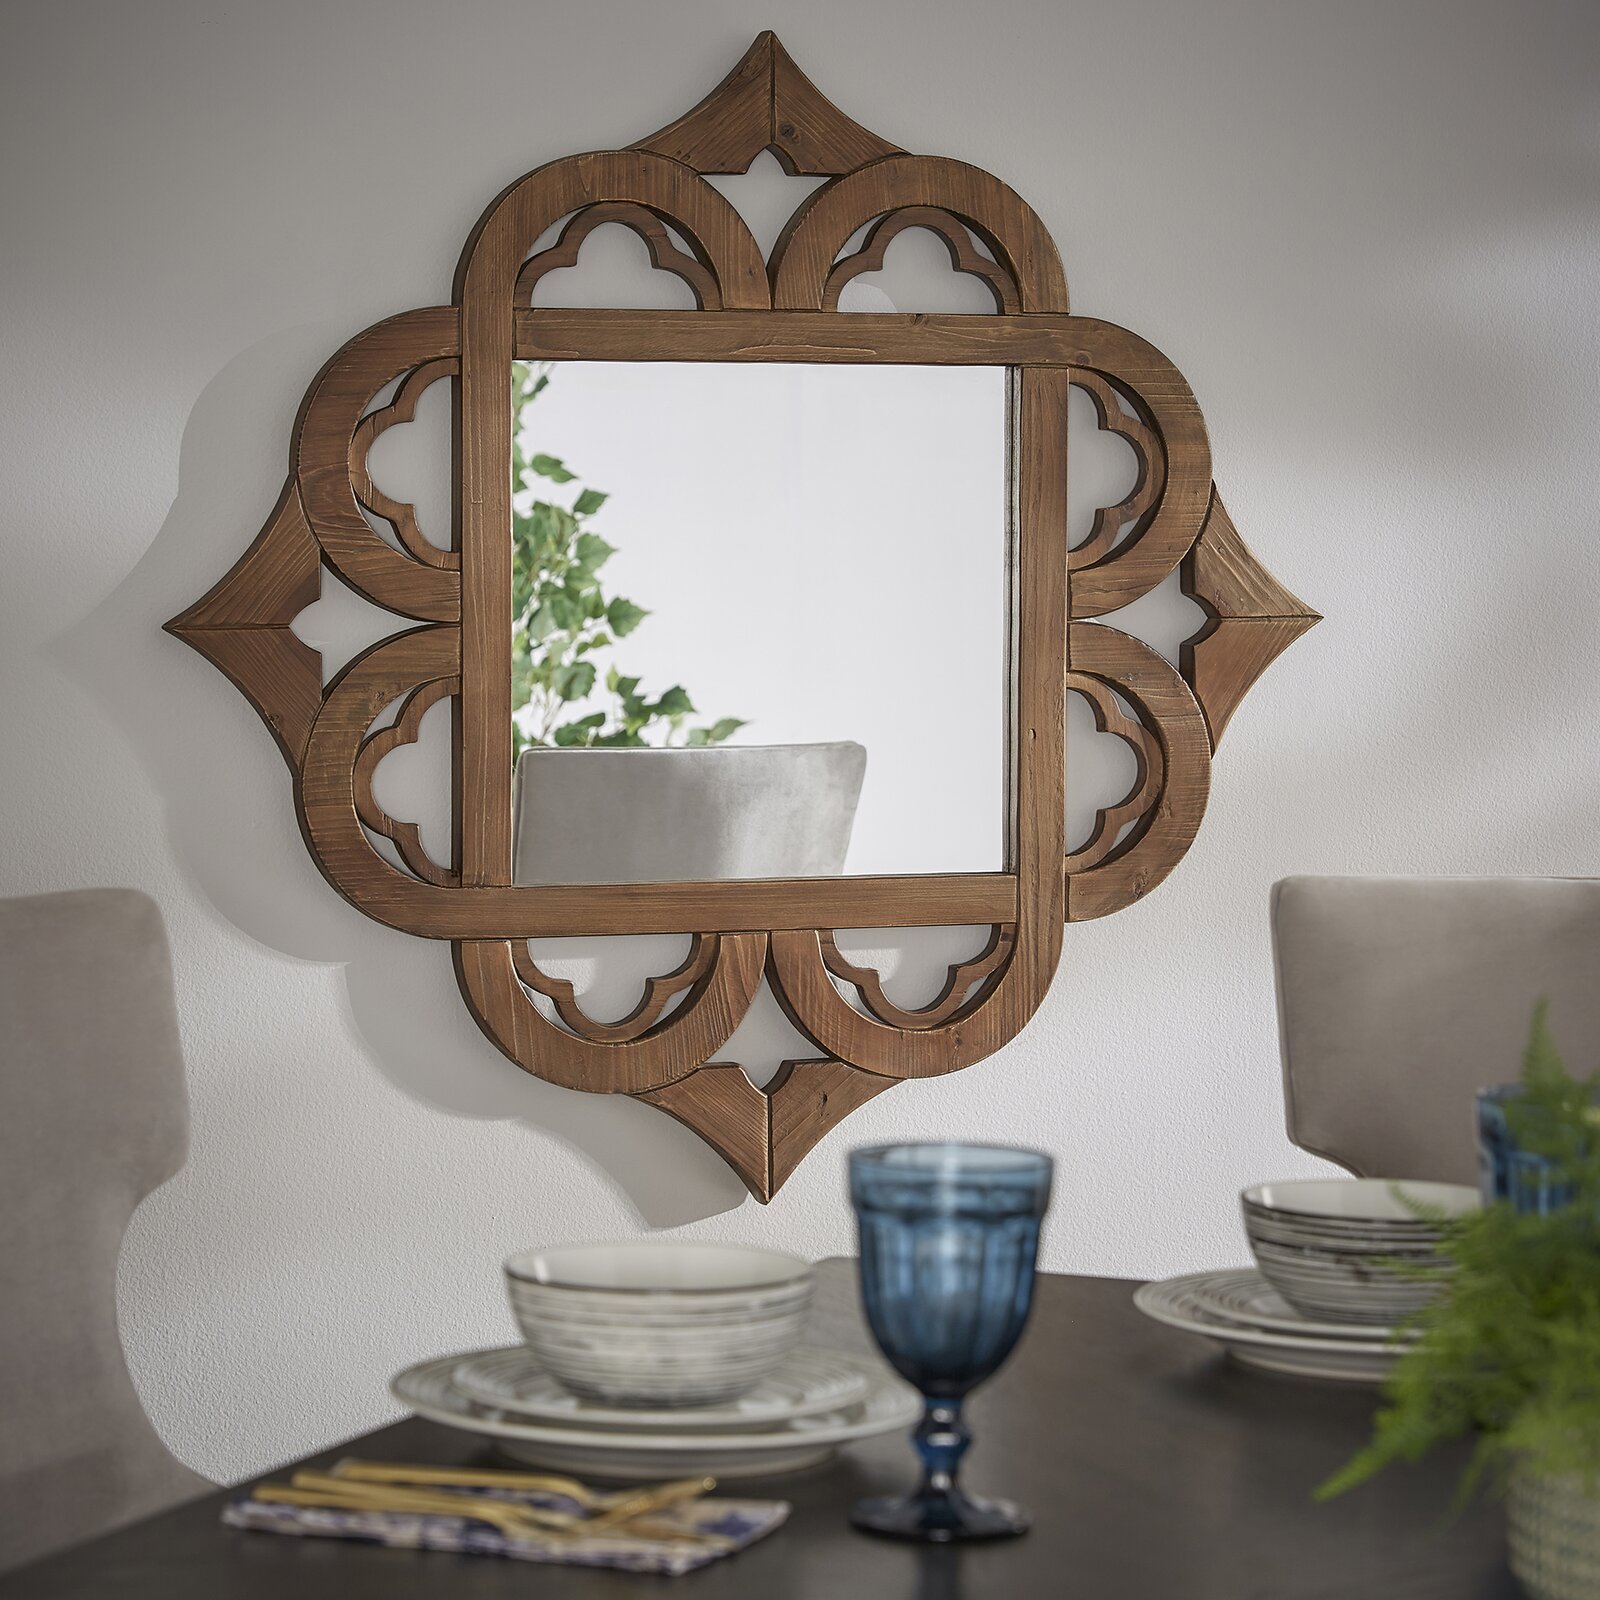 Moroccan Wall Mirror - Arniaga Traditional Accent Mirror